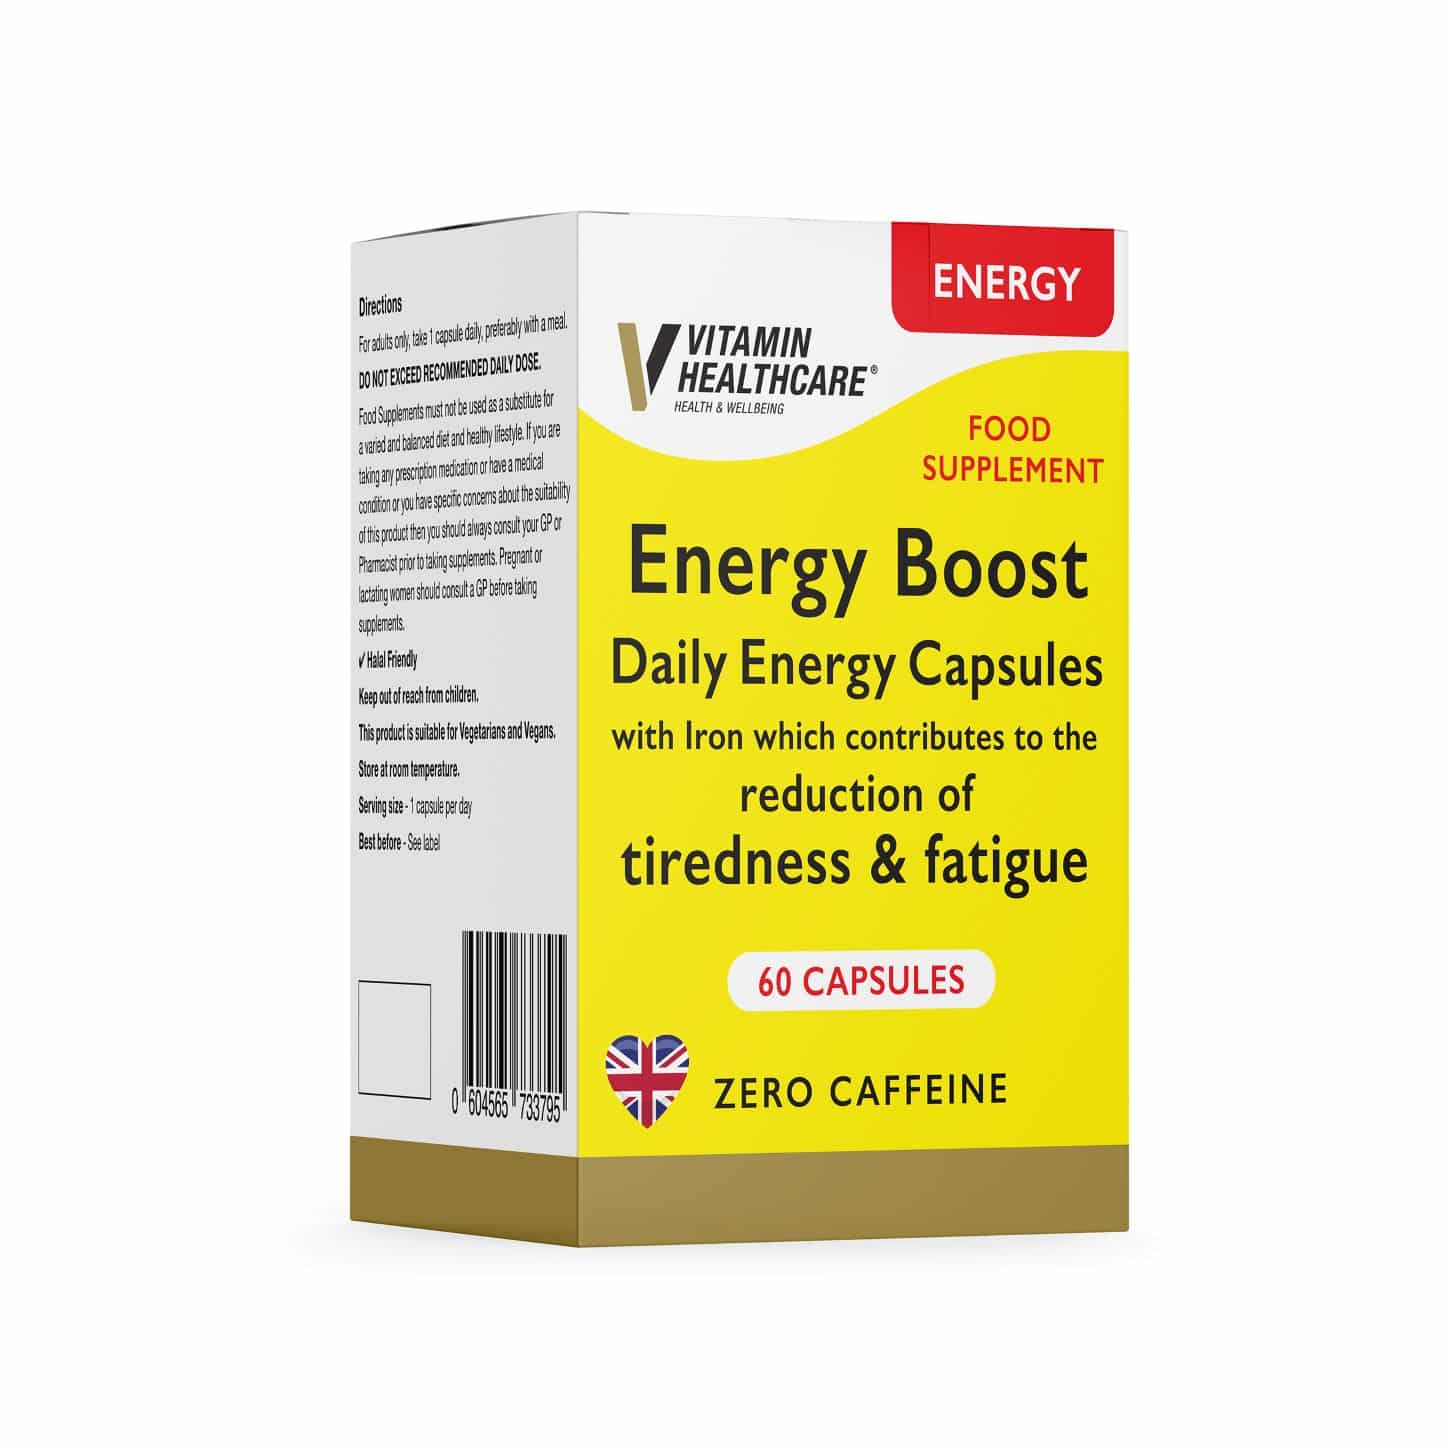 Energy-boosting capsules